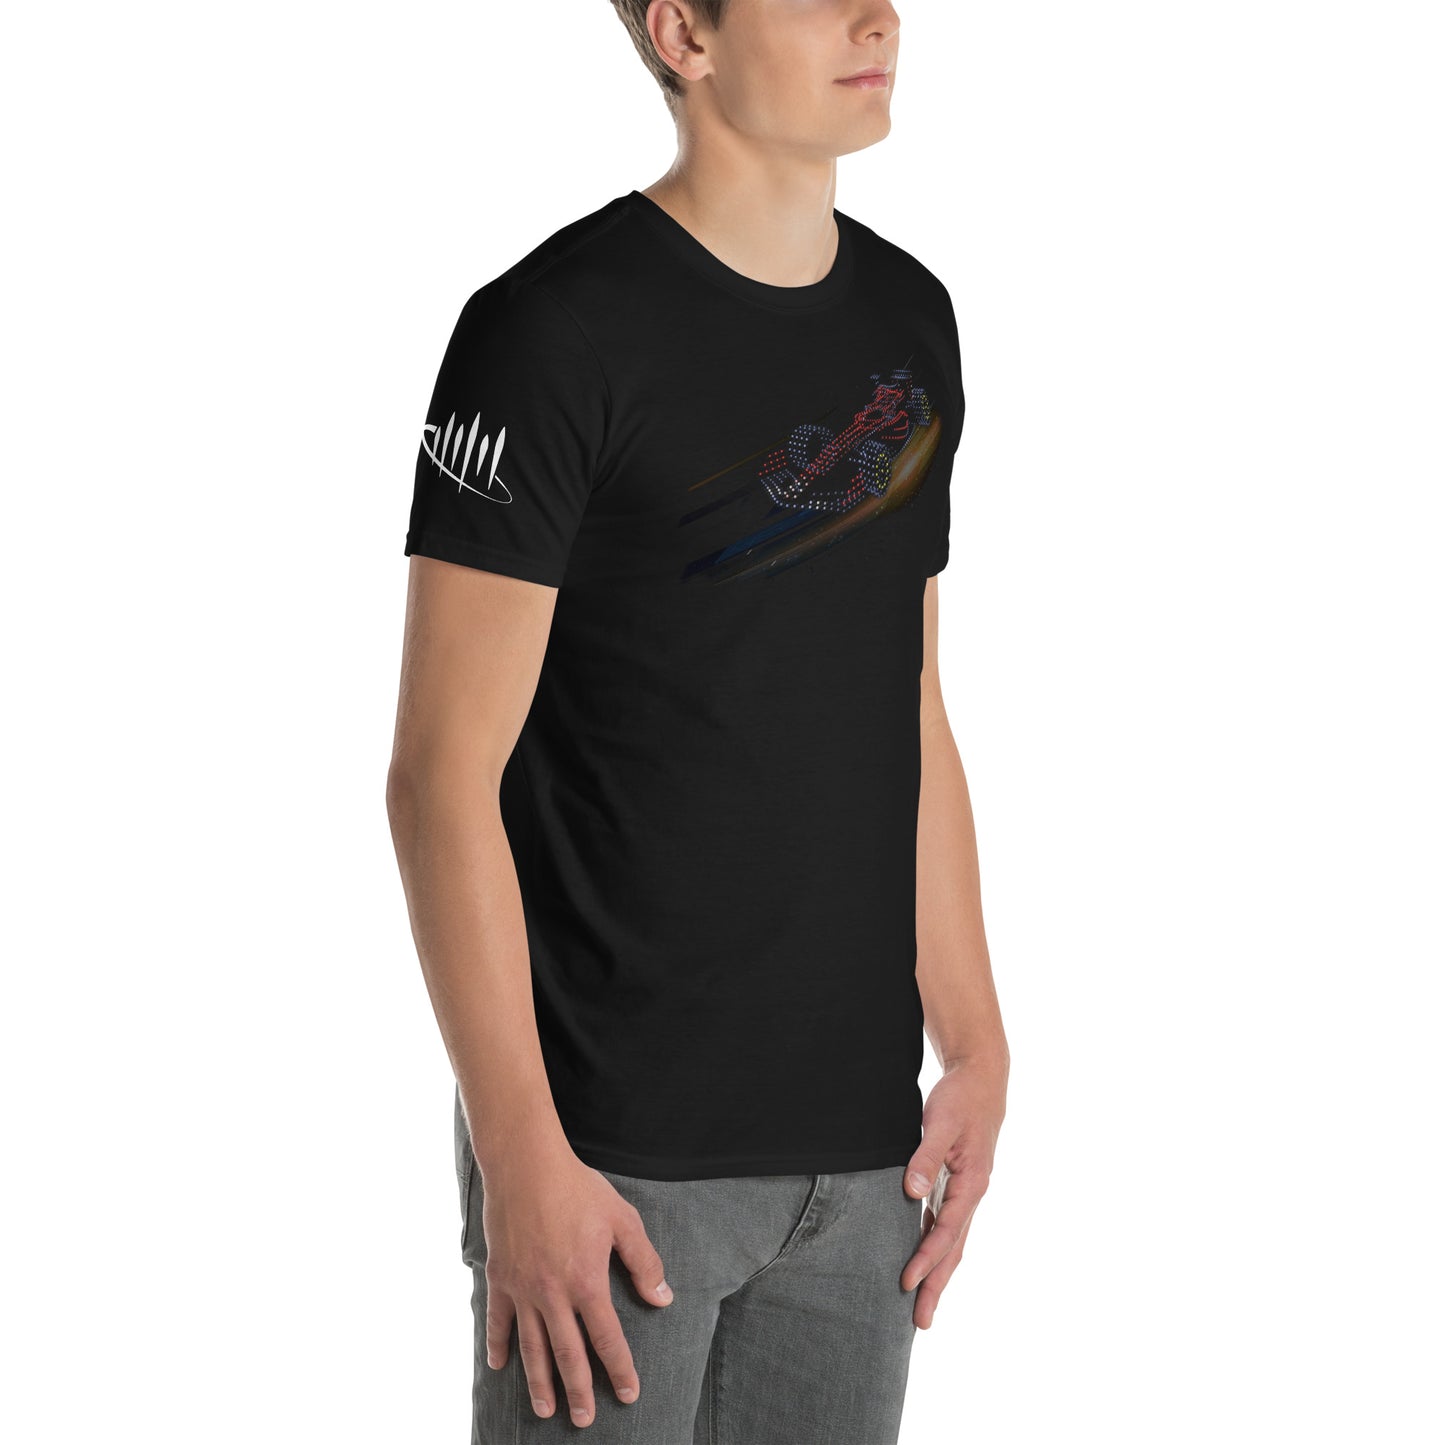 Sky Elements Racing Team Short-Sleeve Unisex T-Shirt